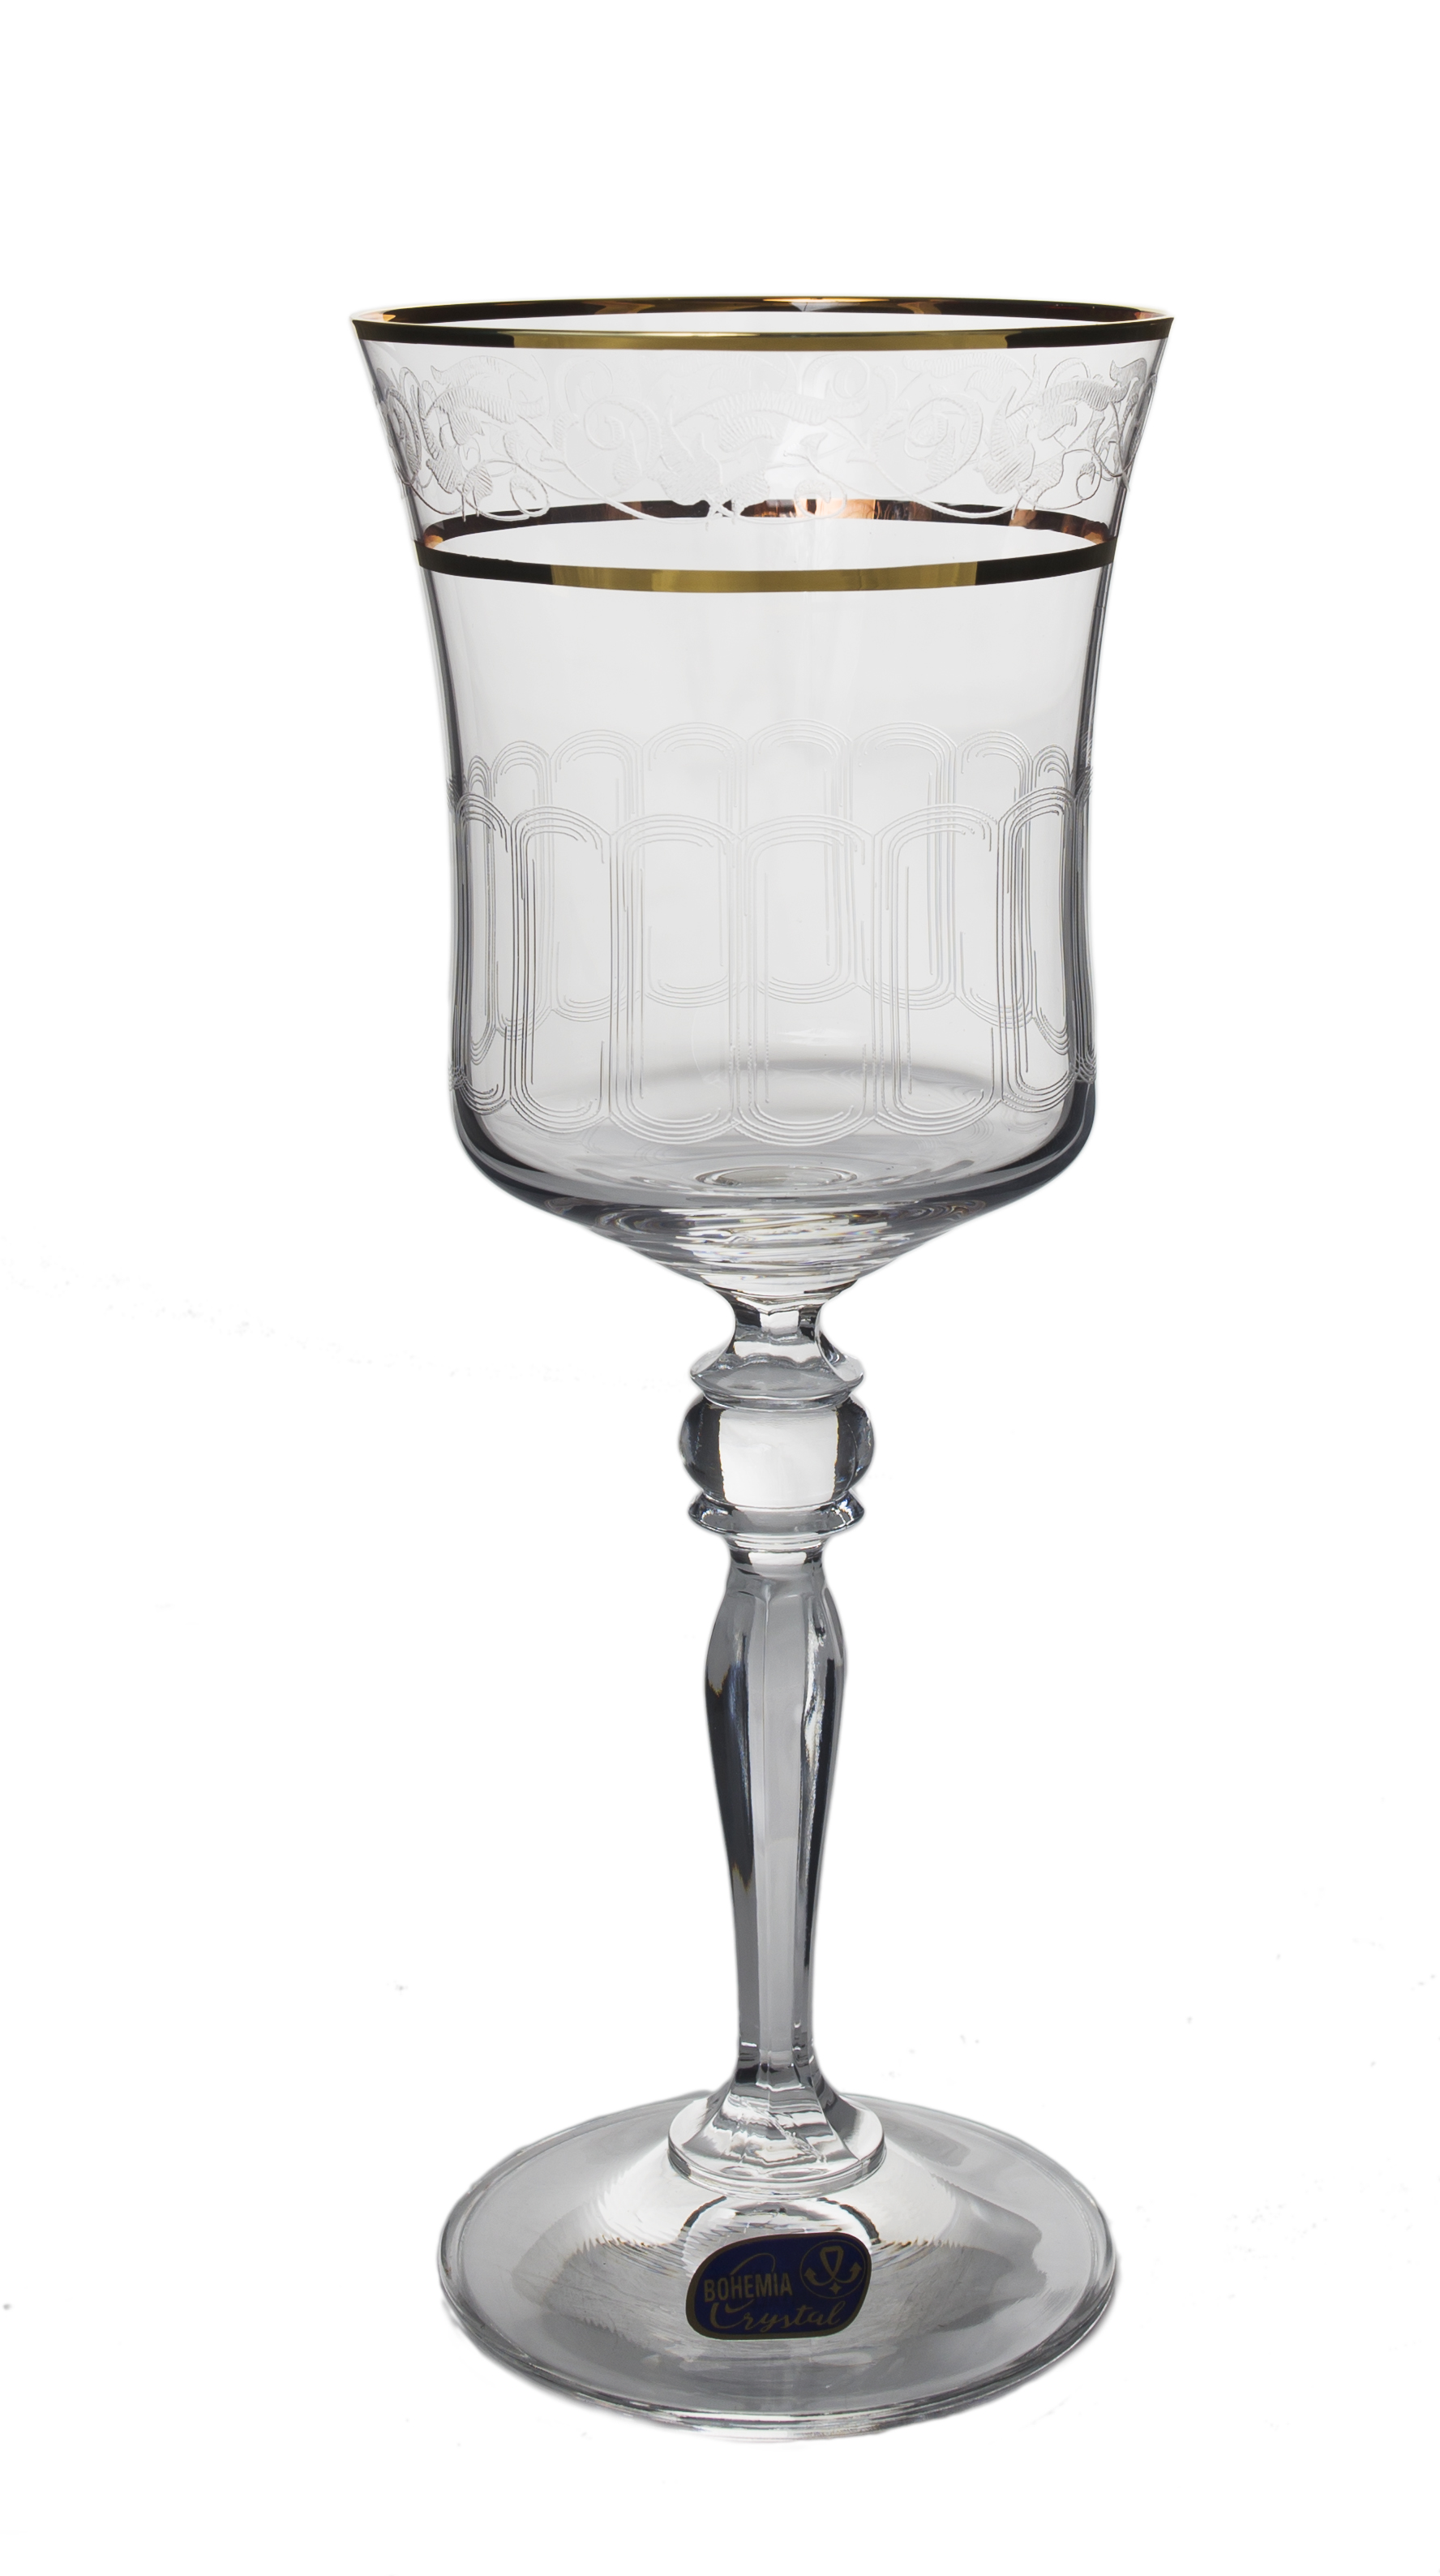 GRACE decor aur - Set 6 pahare sticla cristalina vin 250 ml